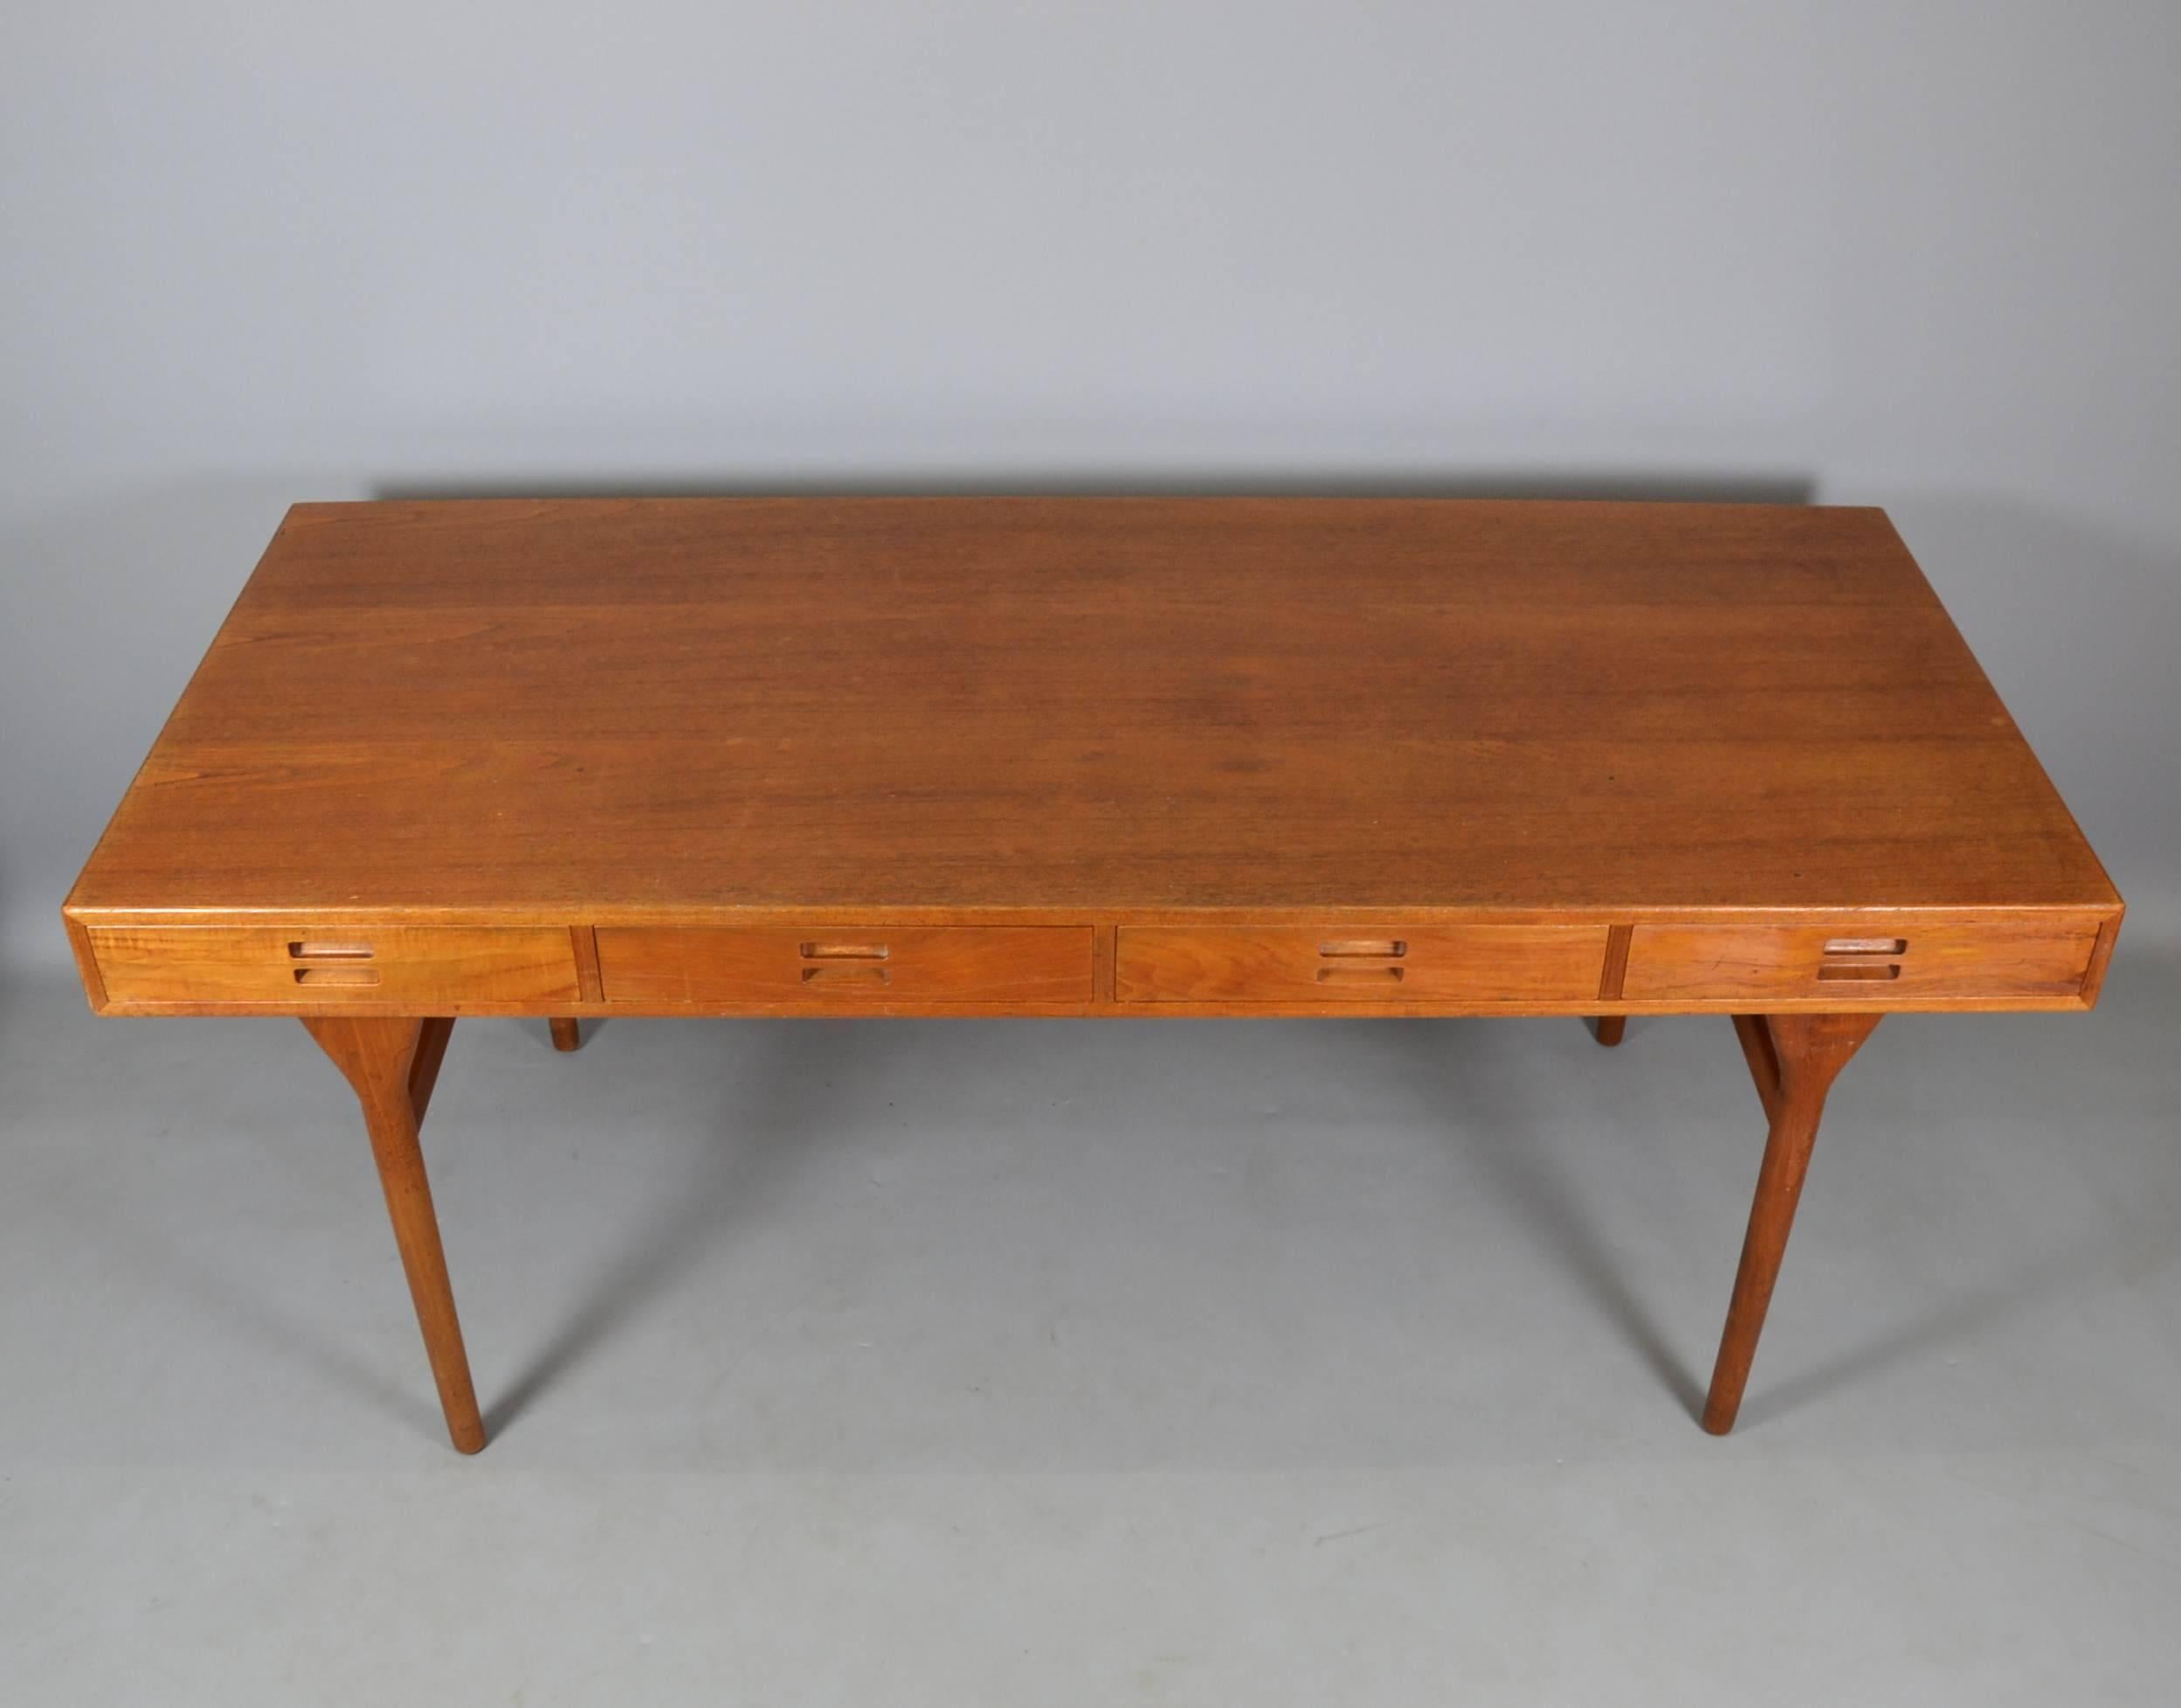 Designed by Nanna Ditzel in 1958. Produced by Søren Willadsen Møbelfabrik, Denmark. Teak desk with four drawers.